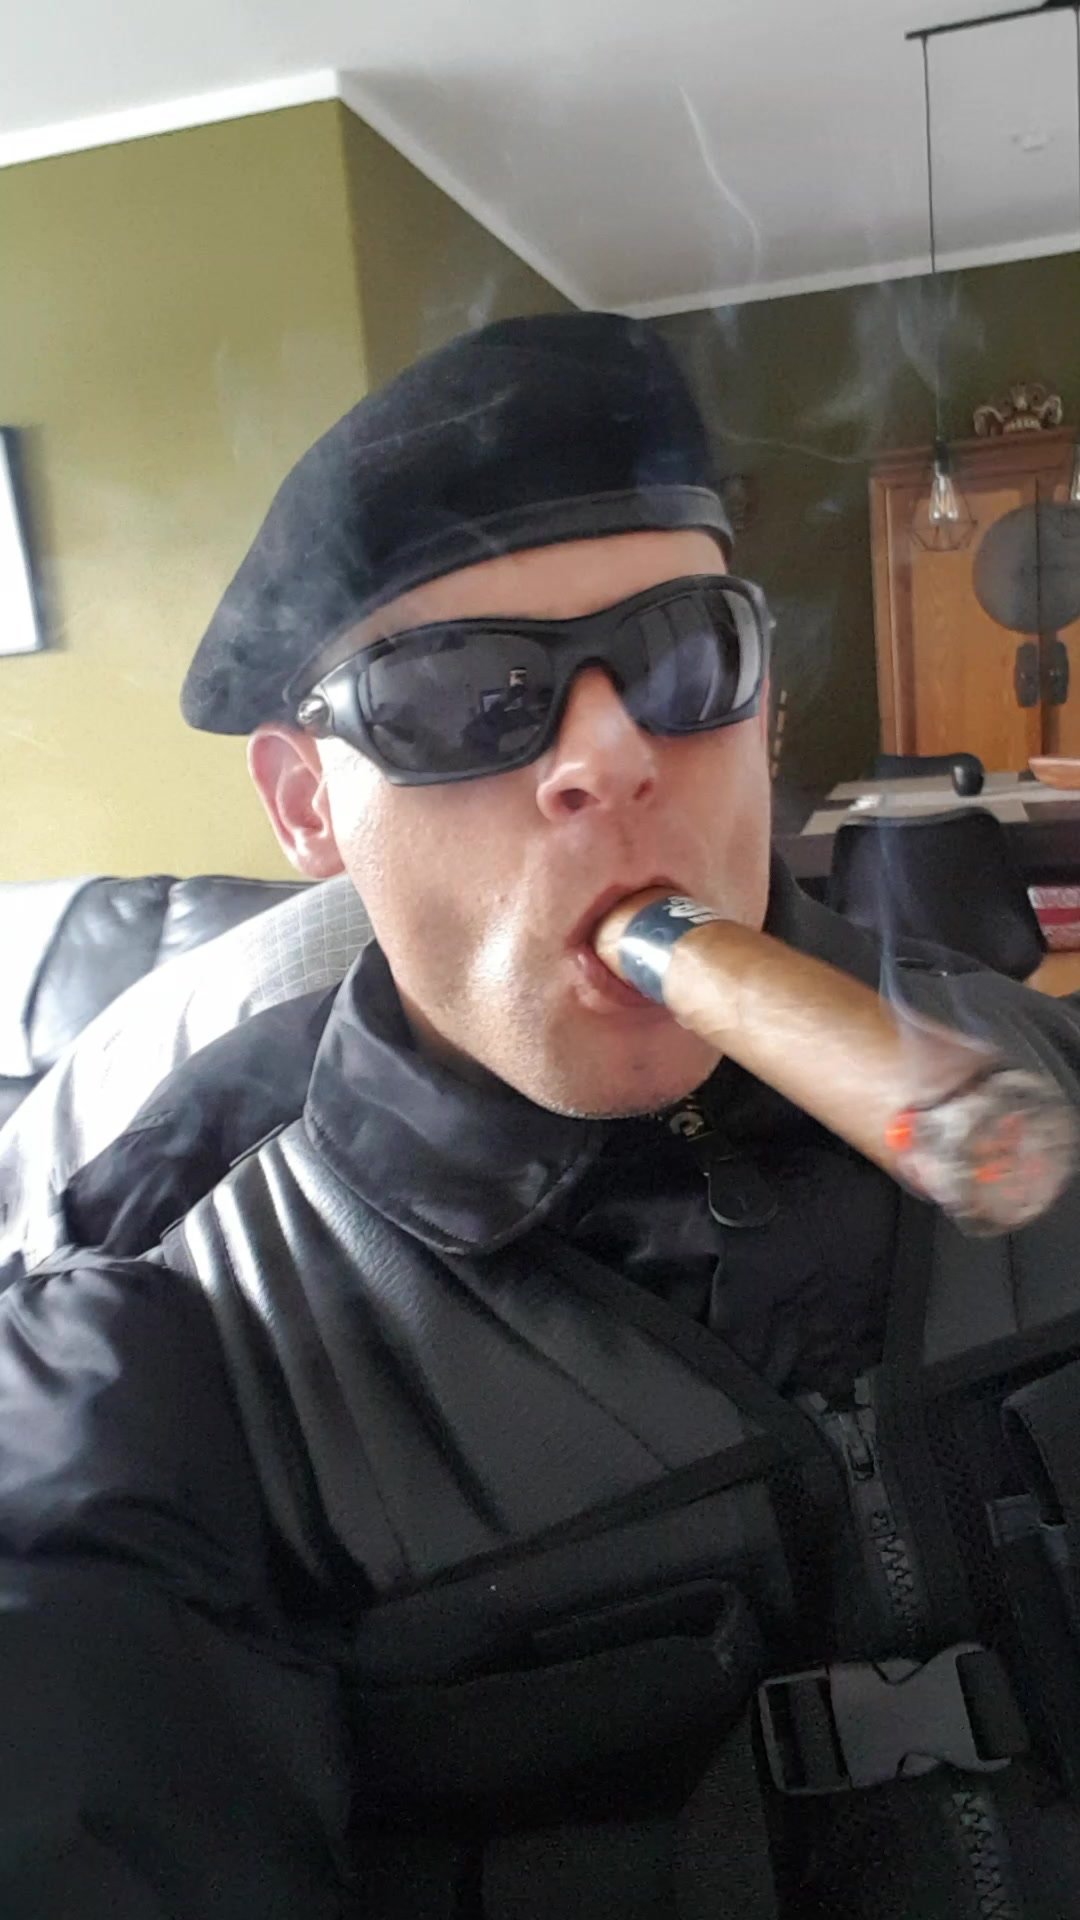 Security Guard smoking a Cigar in Uniform pic